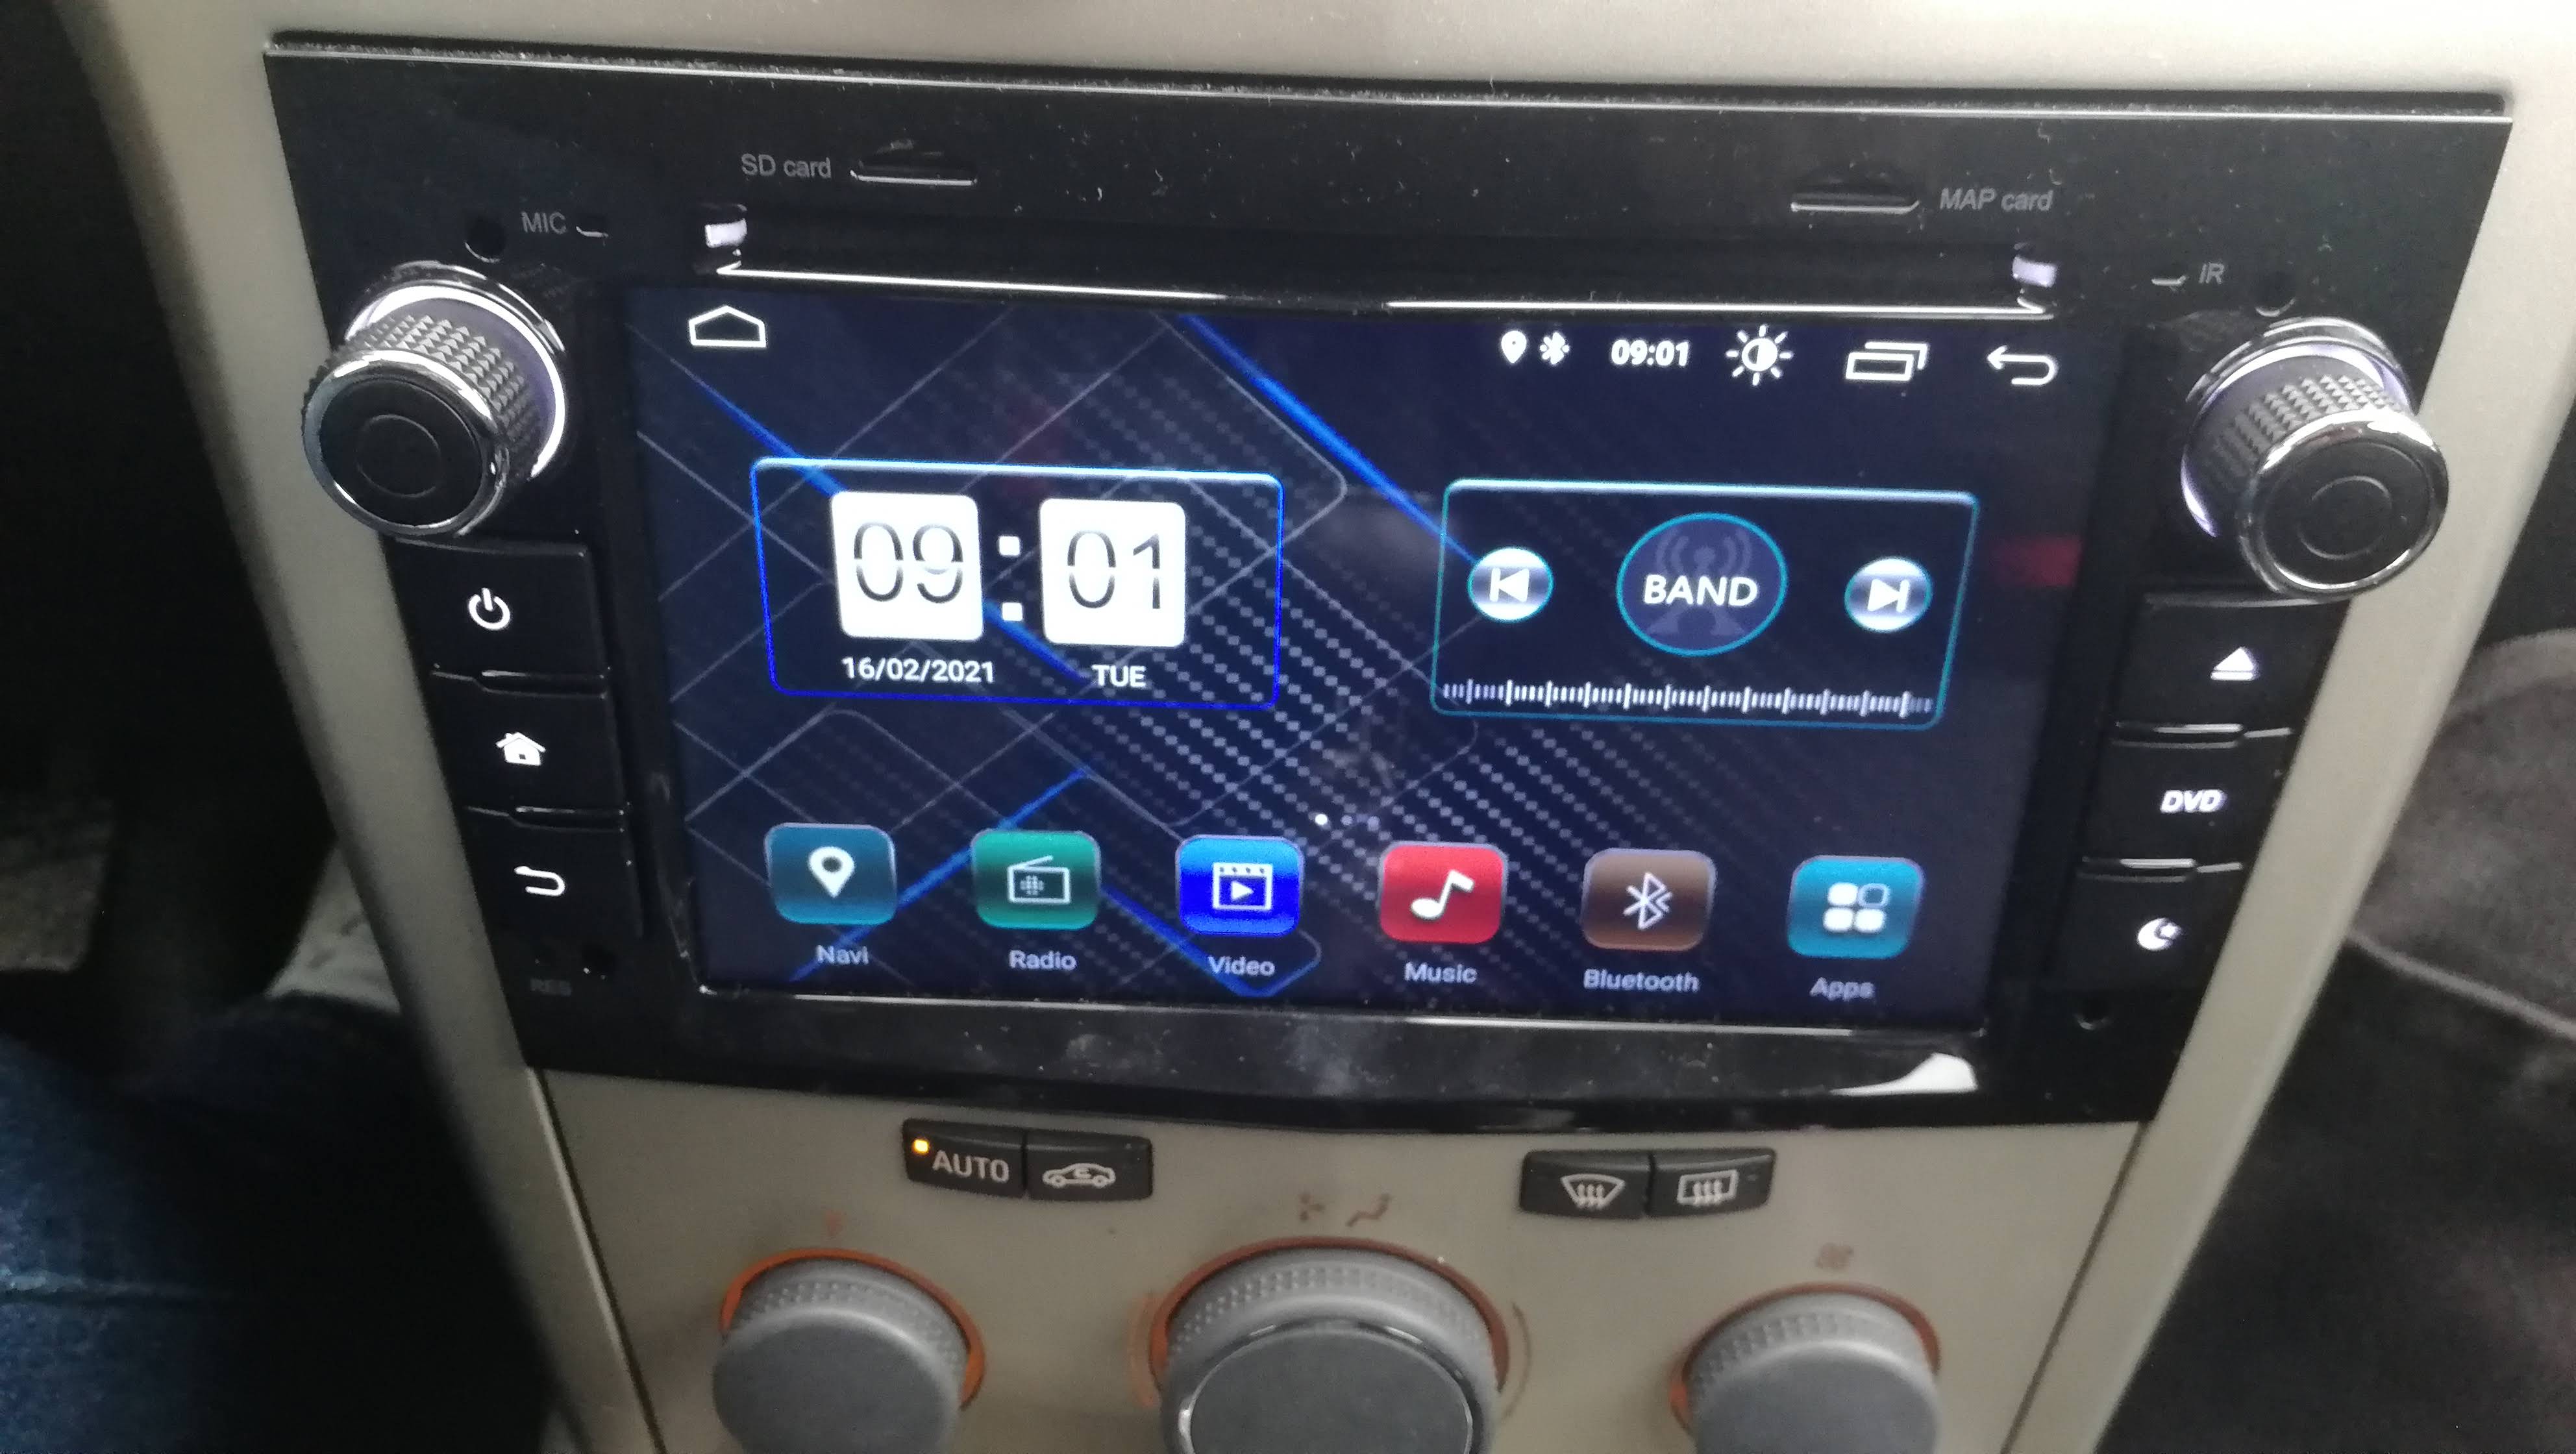 Pimp my Radio Android, Bluetooth und Alexa fürs Auto